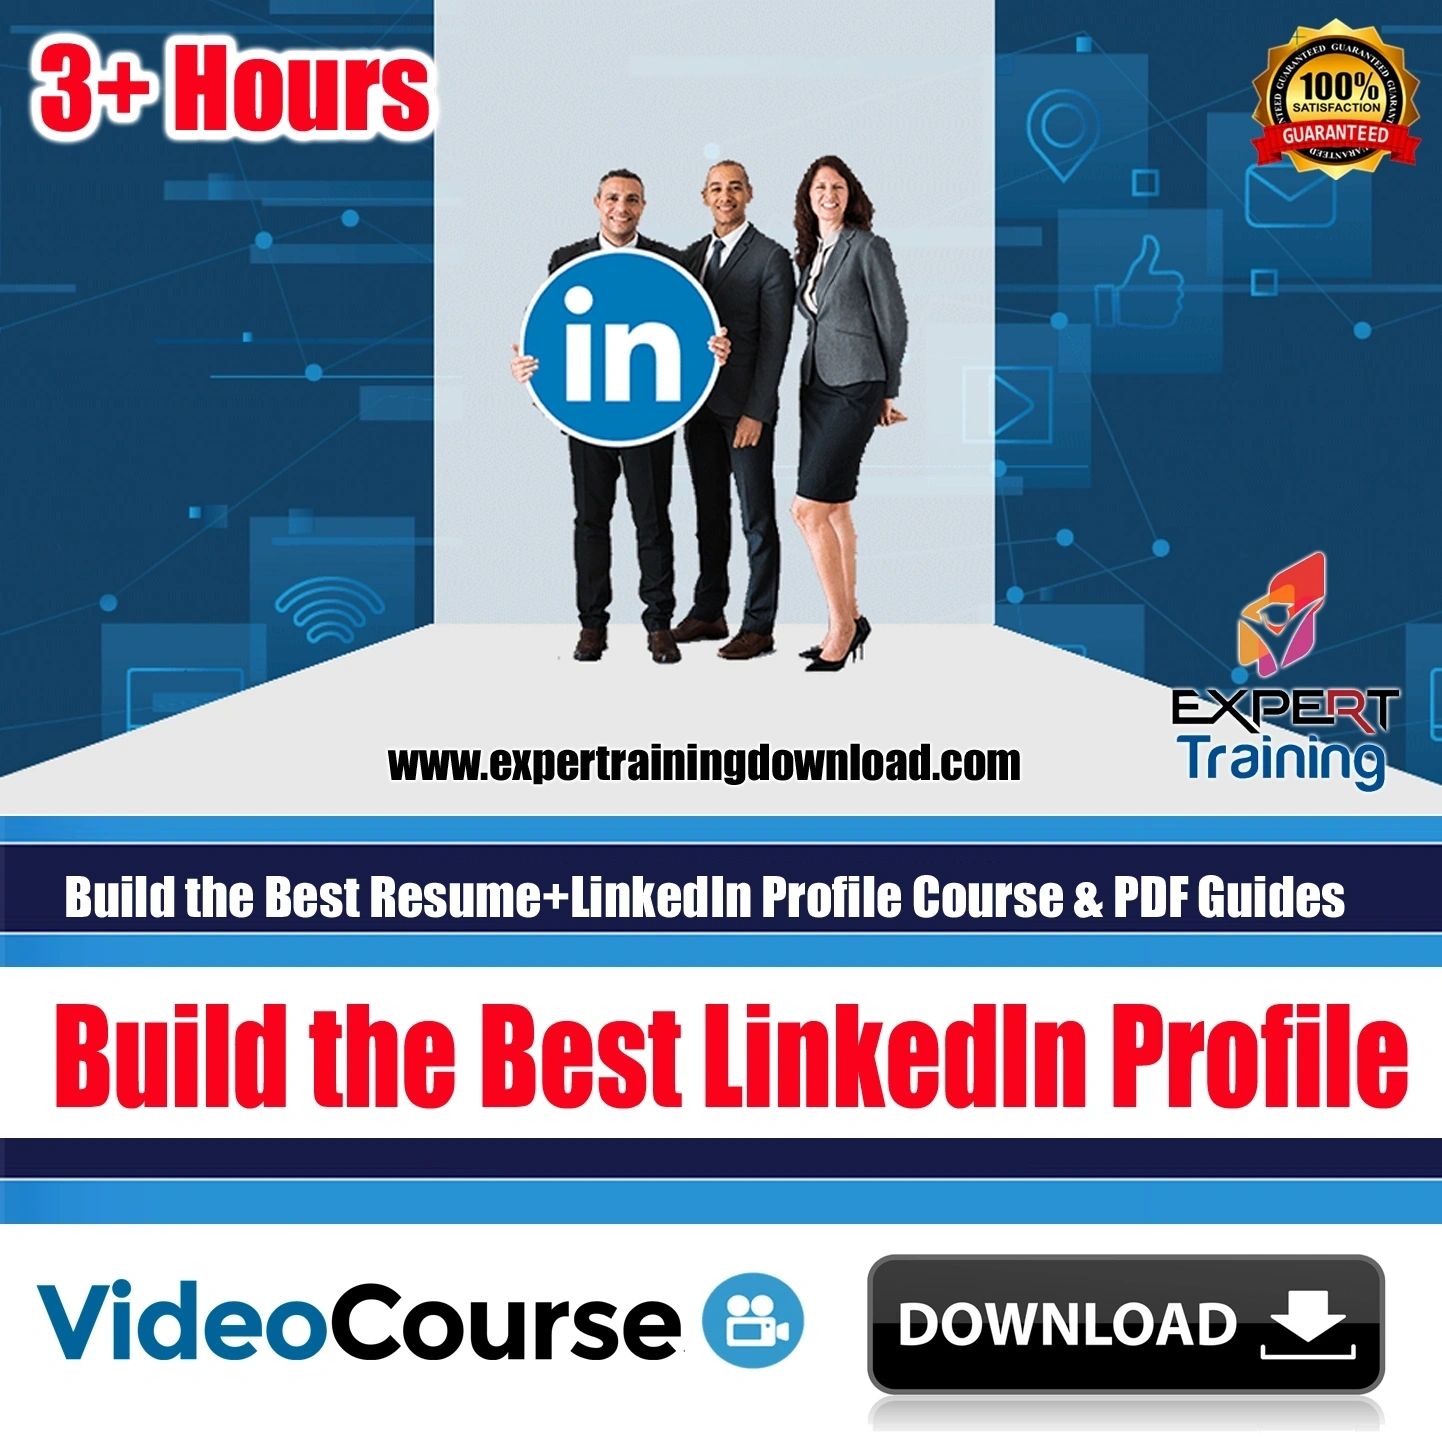 Build the Best Resume+LinkedIn Profile Course & PDF Guides